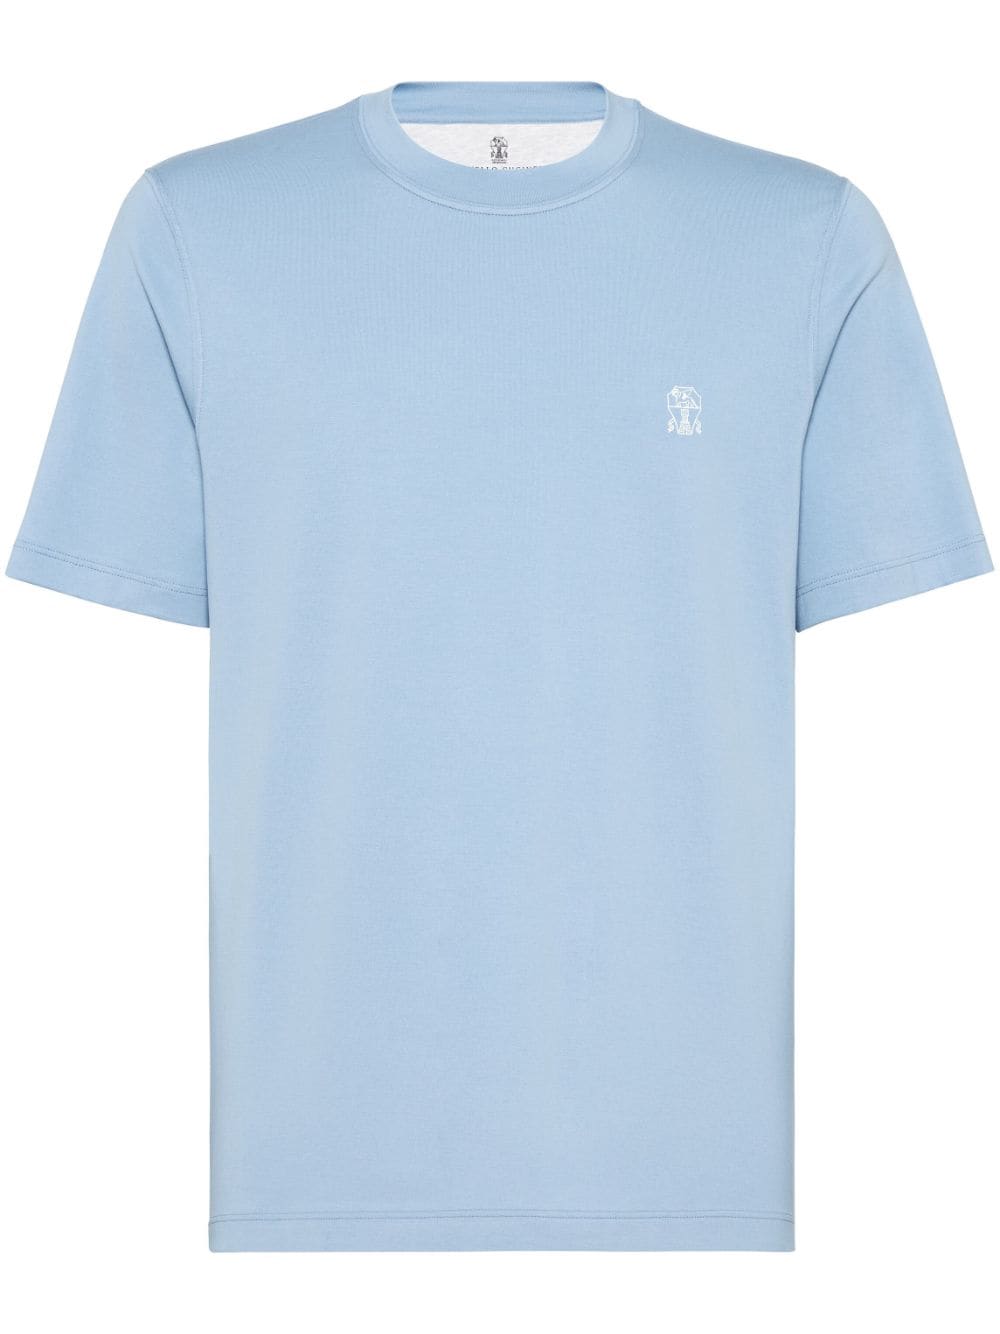 Light blue T-shirt with logo